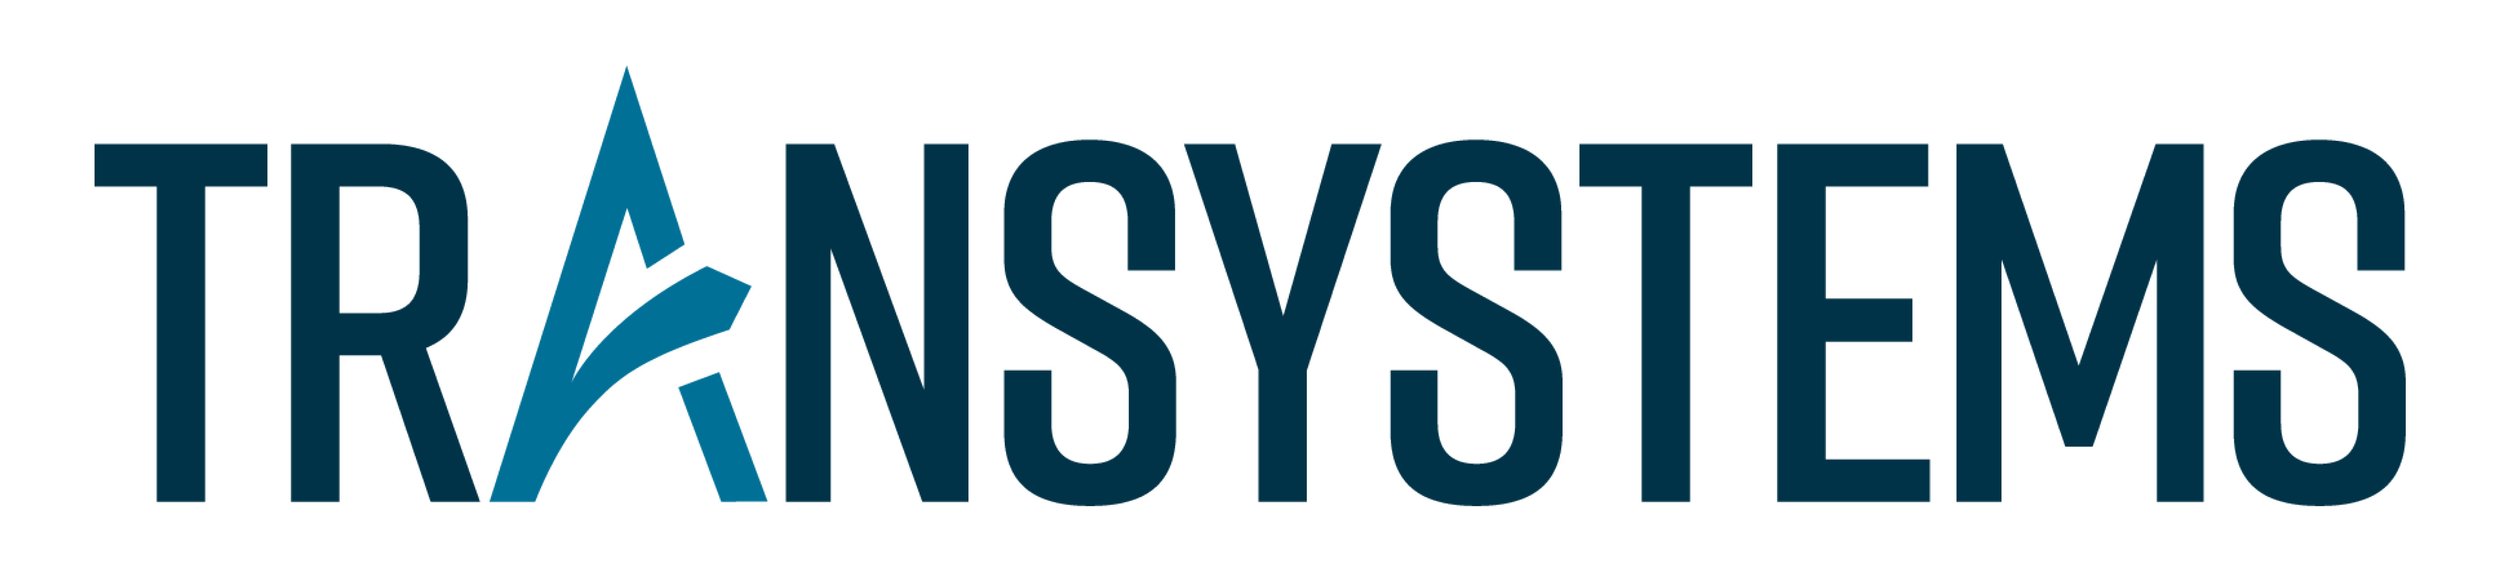 TranSystems Logo - Web.jpg